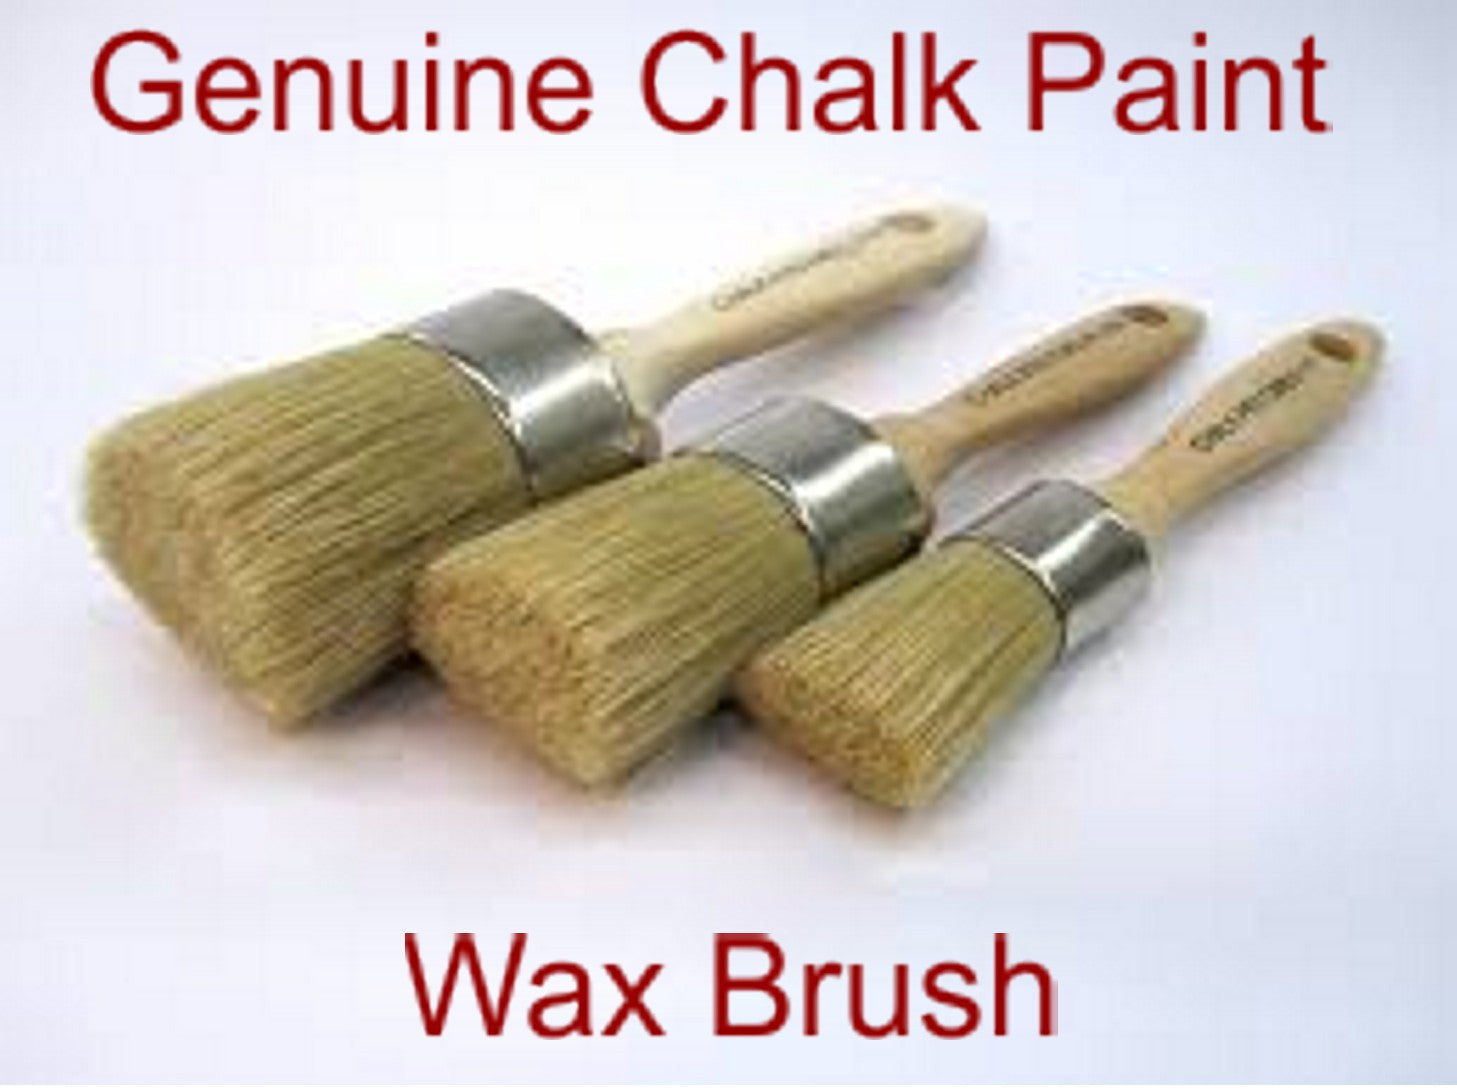 Soft Wax for Chalk Finish paint & Furniture- Clear - Da Vinci Chalk Paint & Rustic home decor